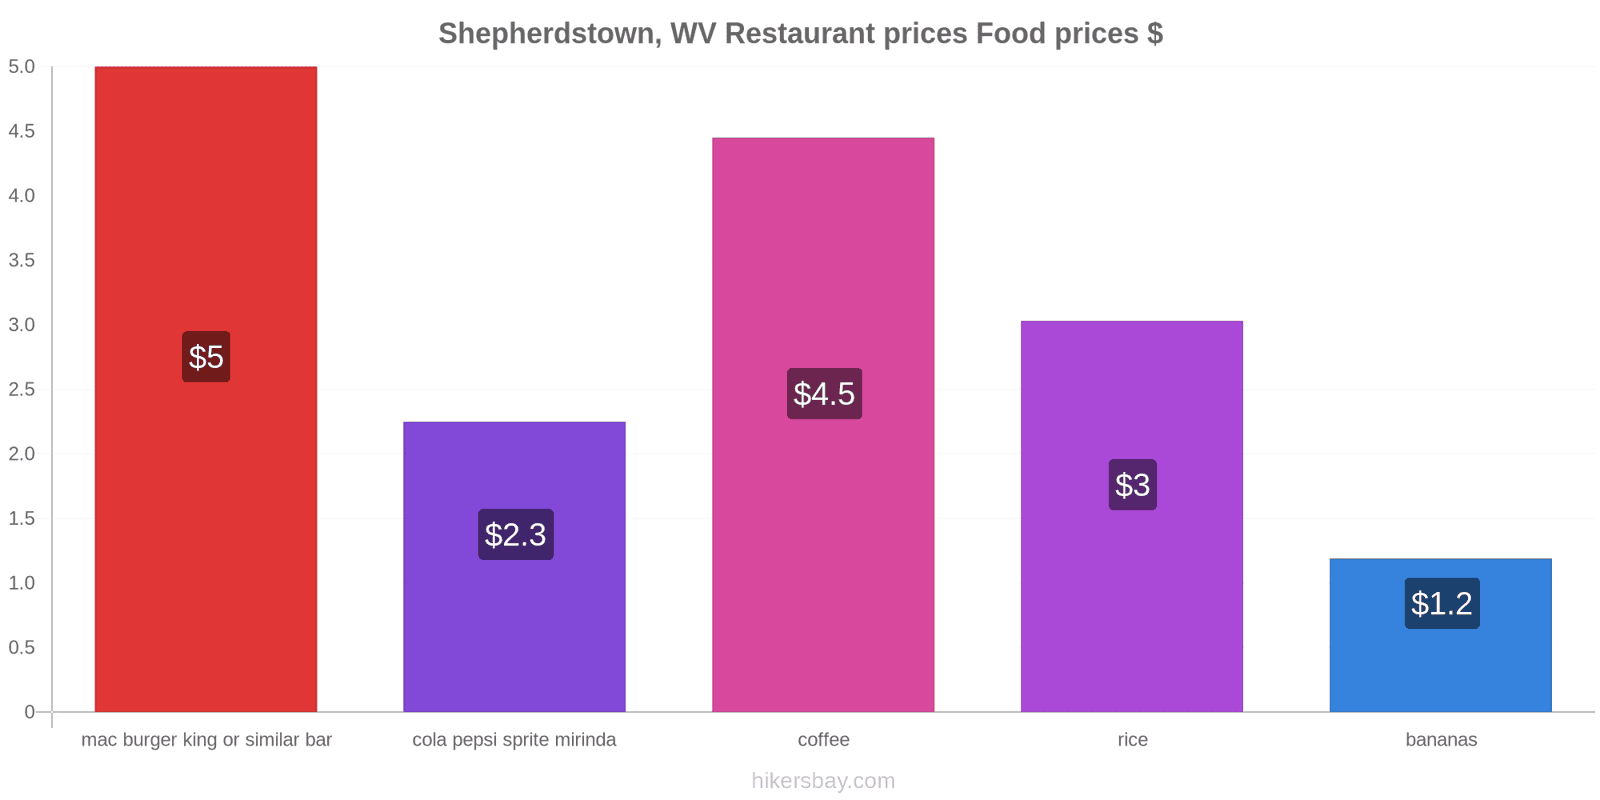 Shepherdstown, WV price changes hikersbay.com